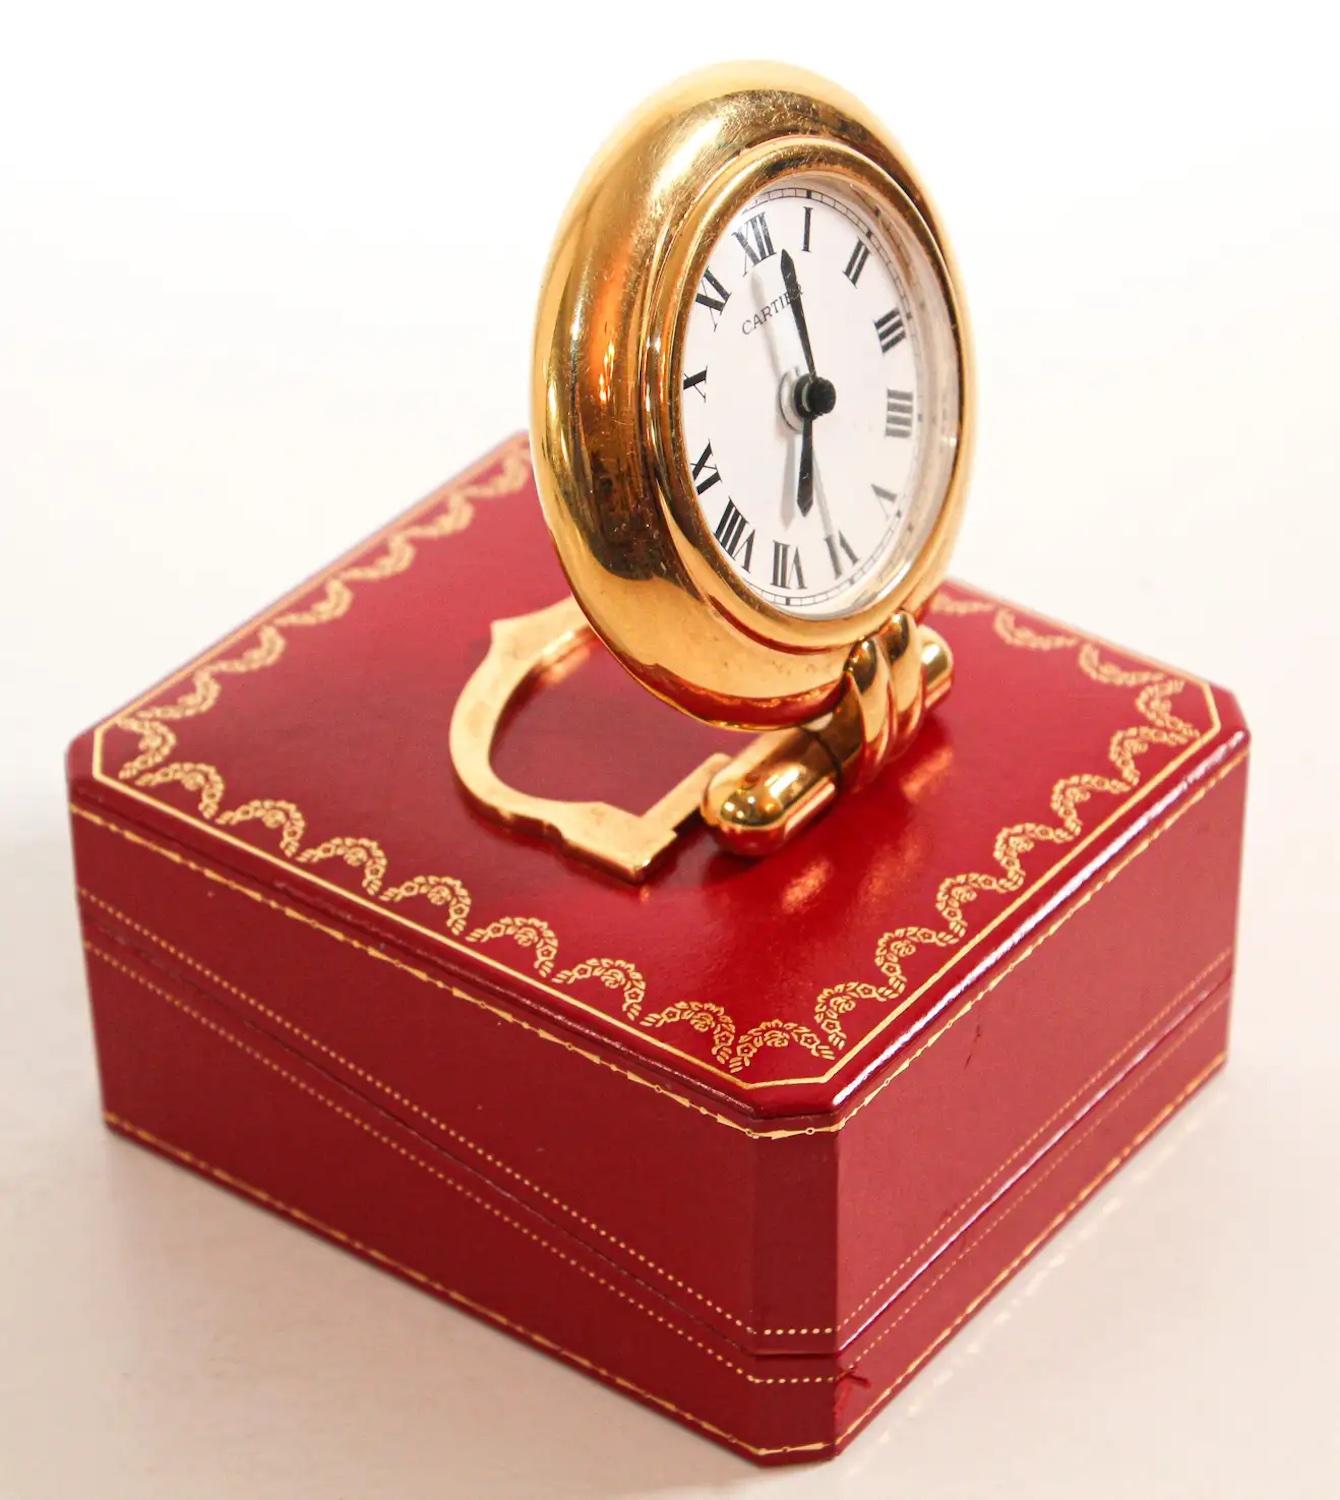 Cartier Colisee Art Deco Travel Desk Clock 24-Karat Gold-Plated 13